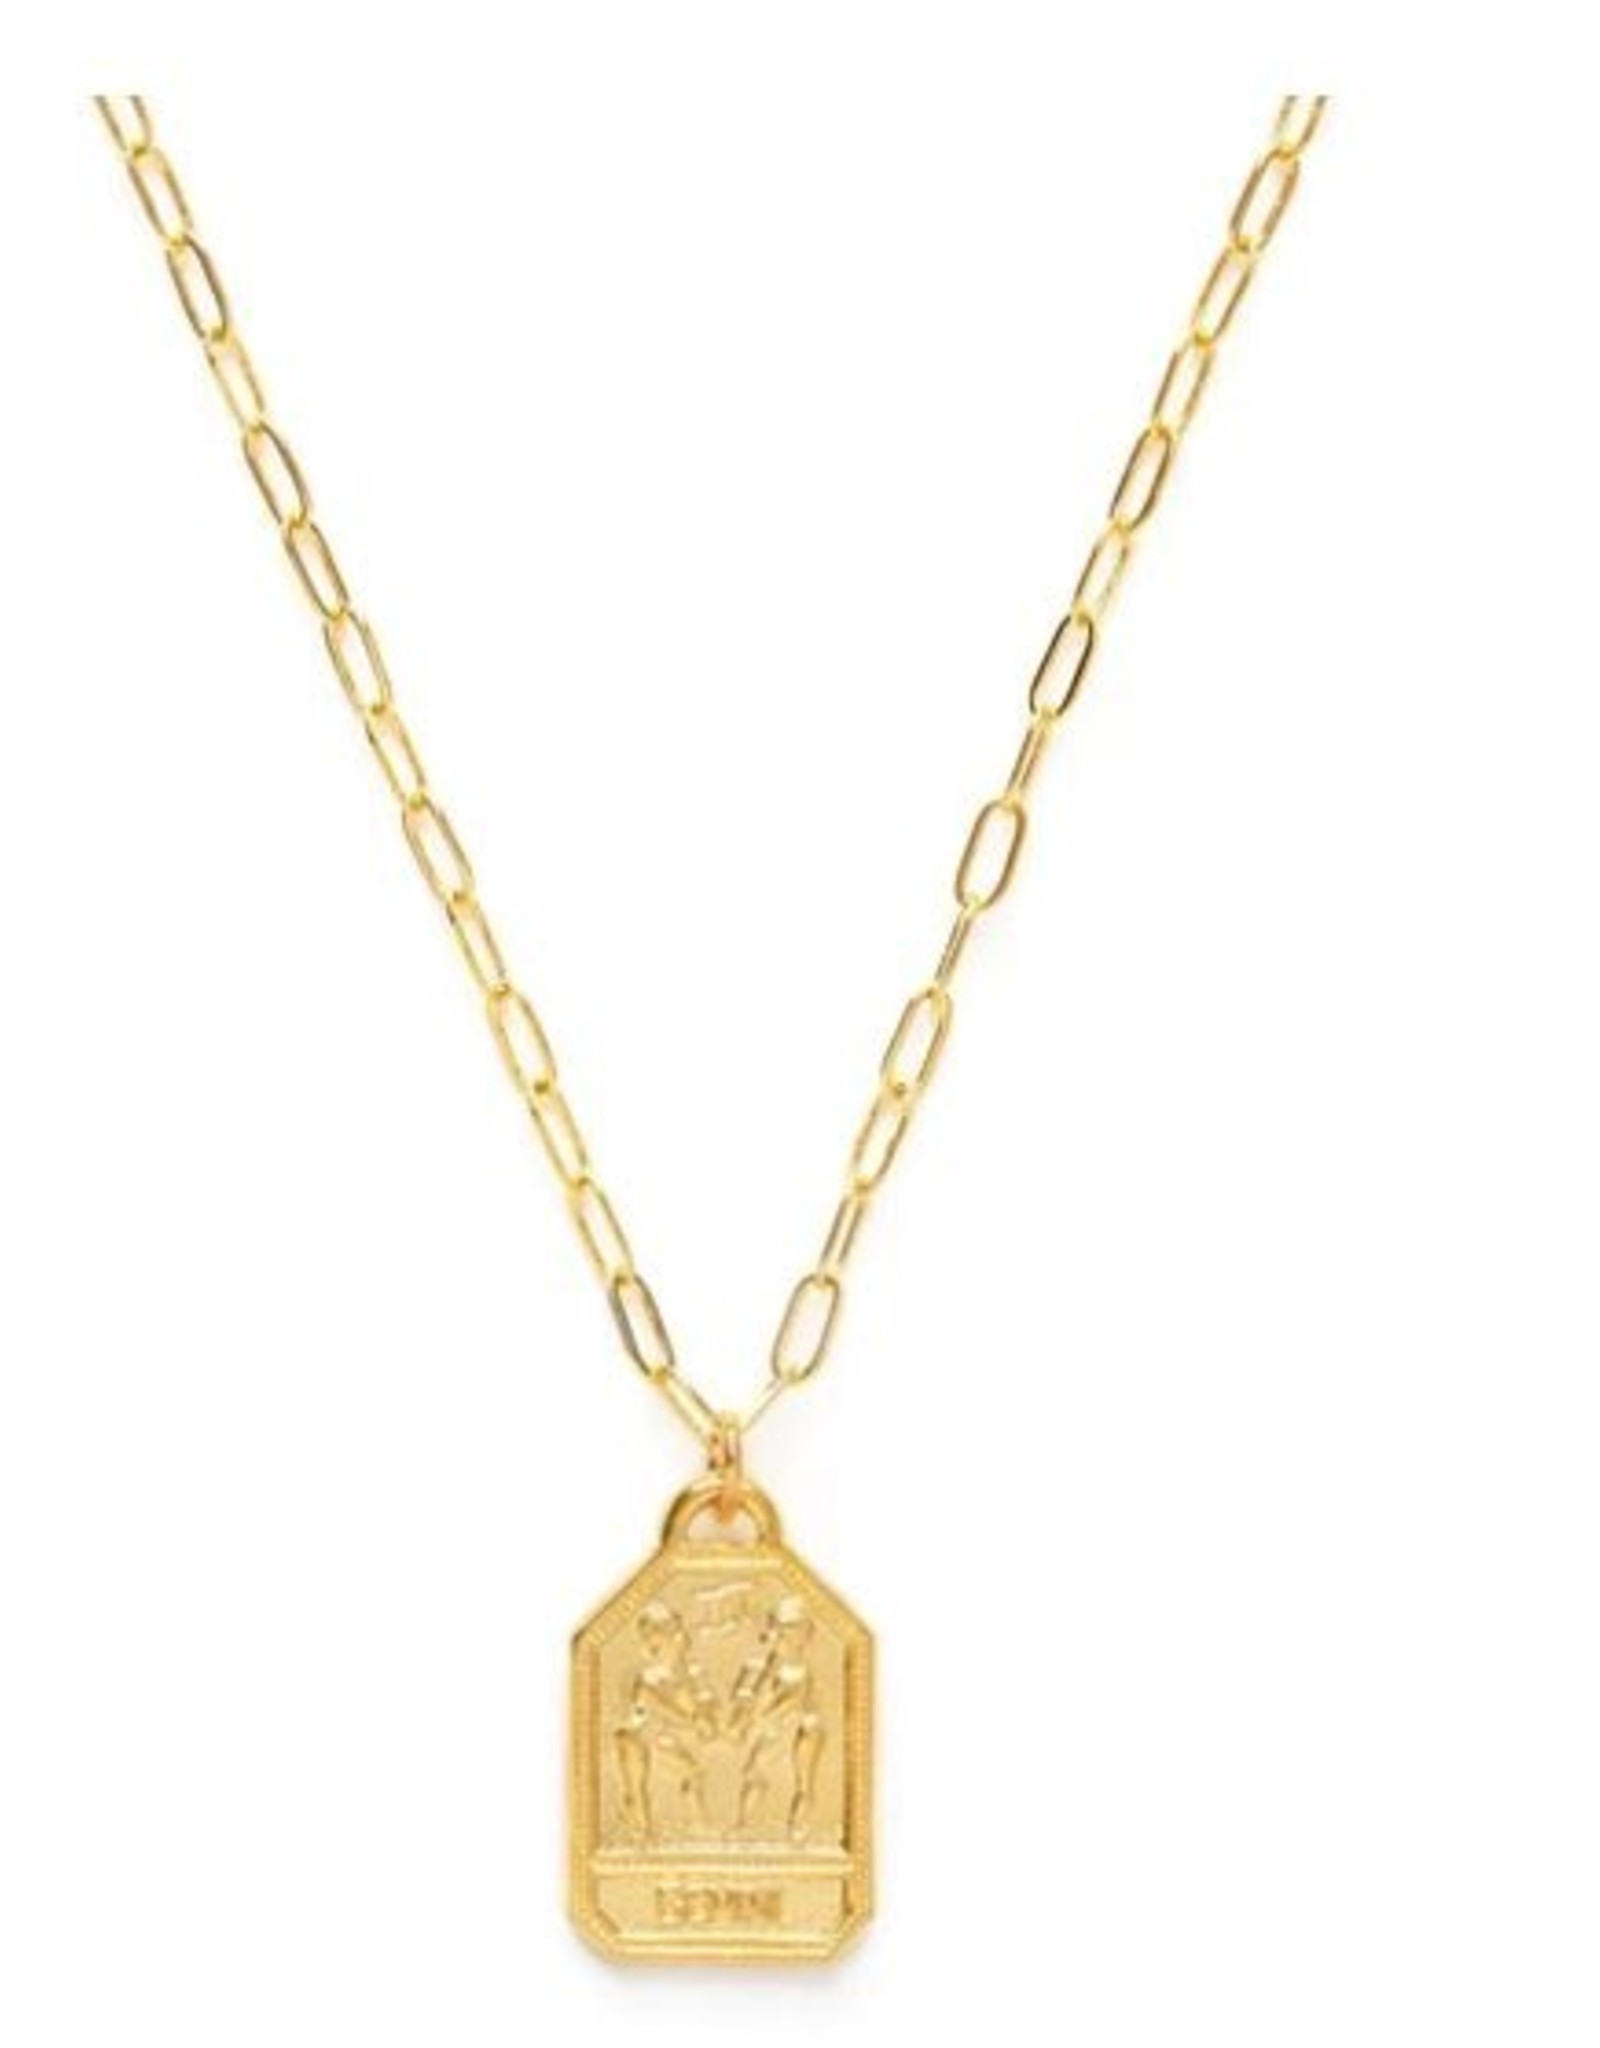 *Amano Studio *Zodiac Medallion Dog Tag Necklace - Gemini